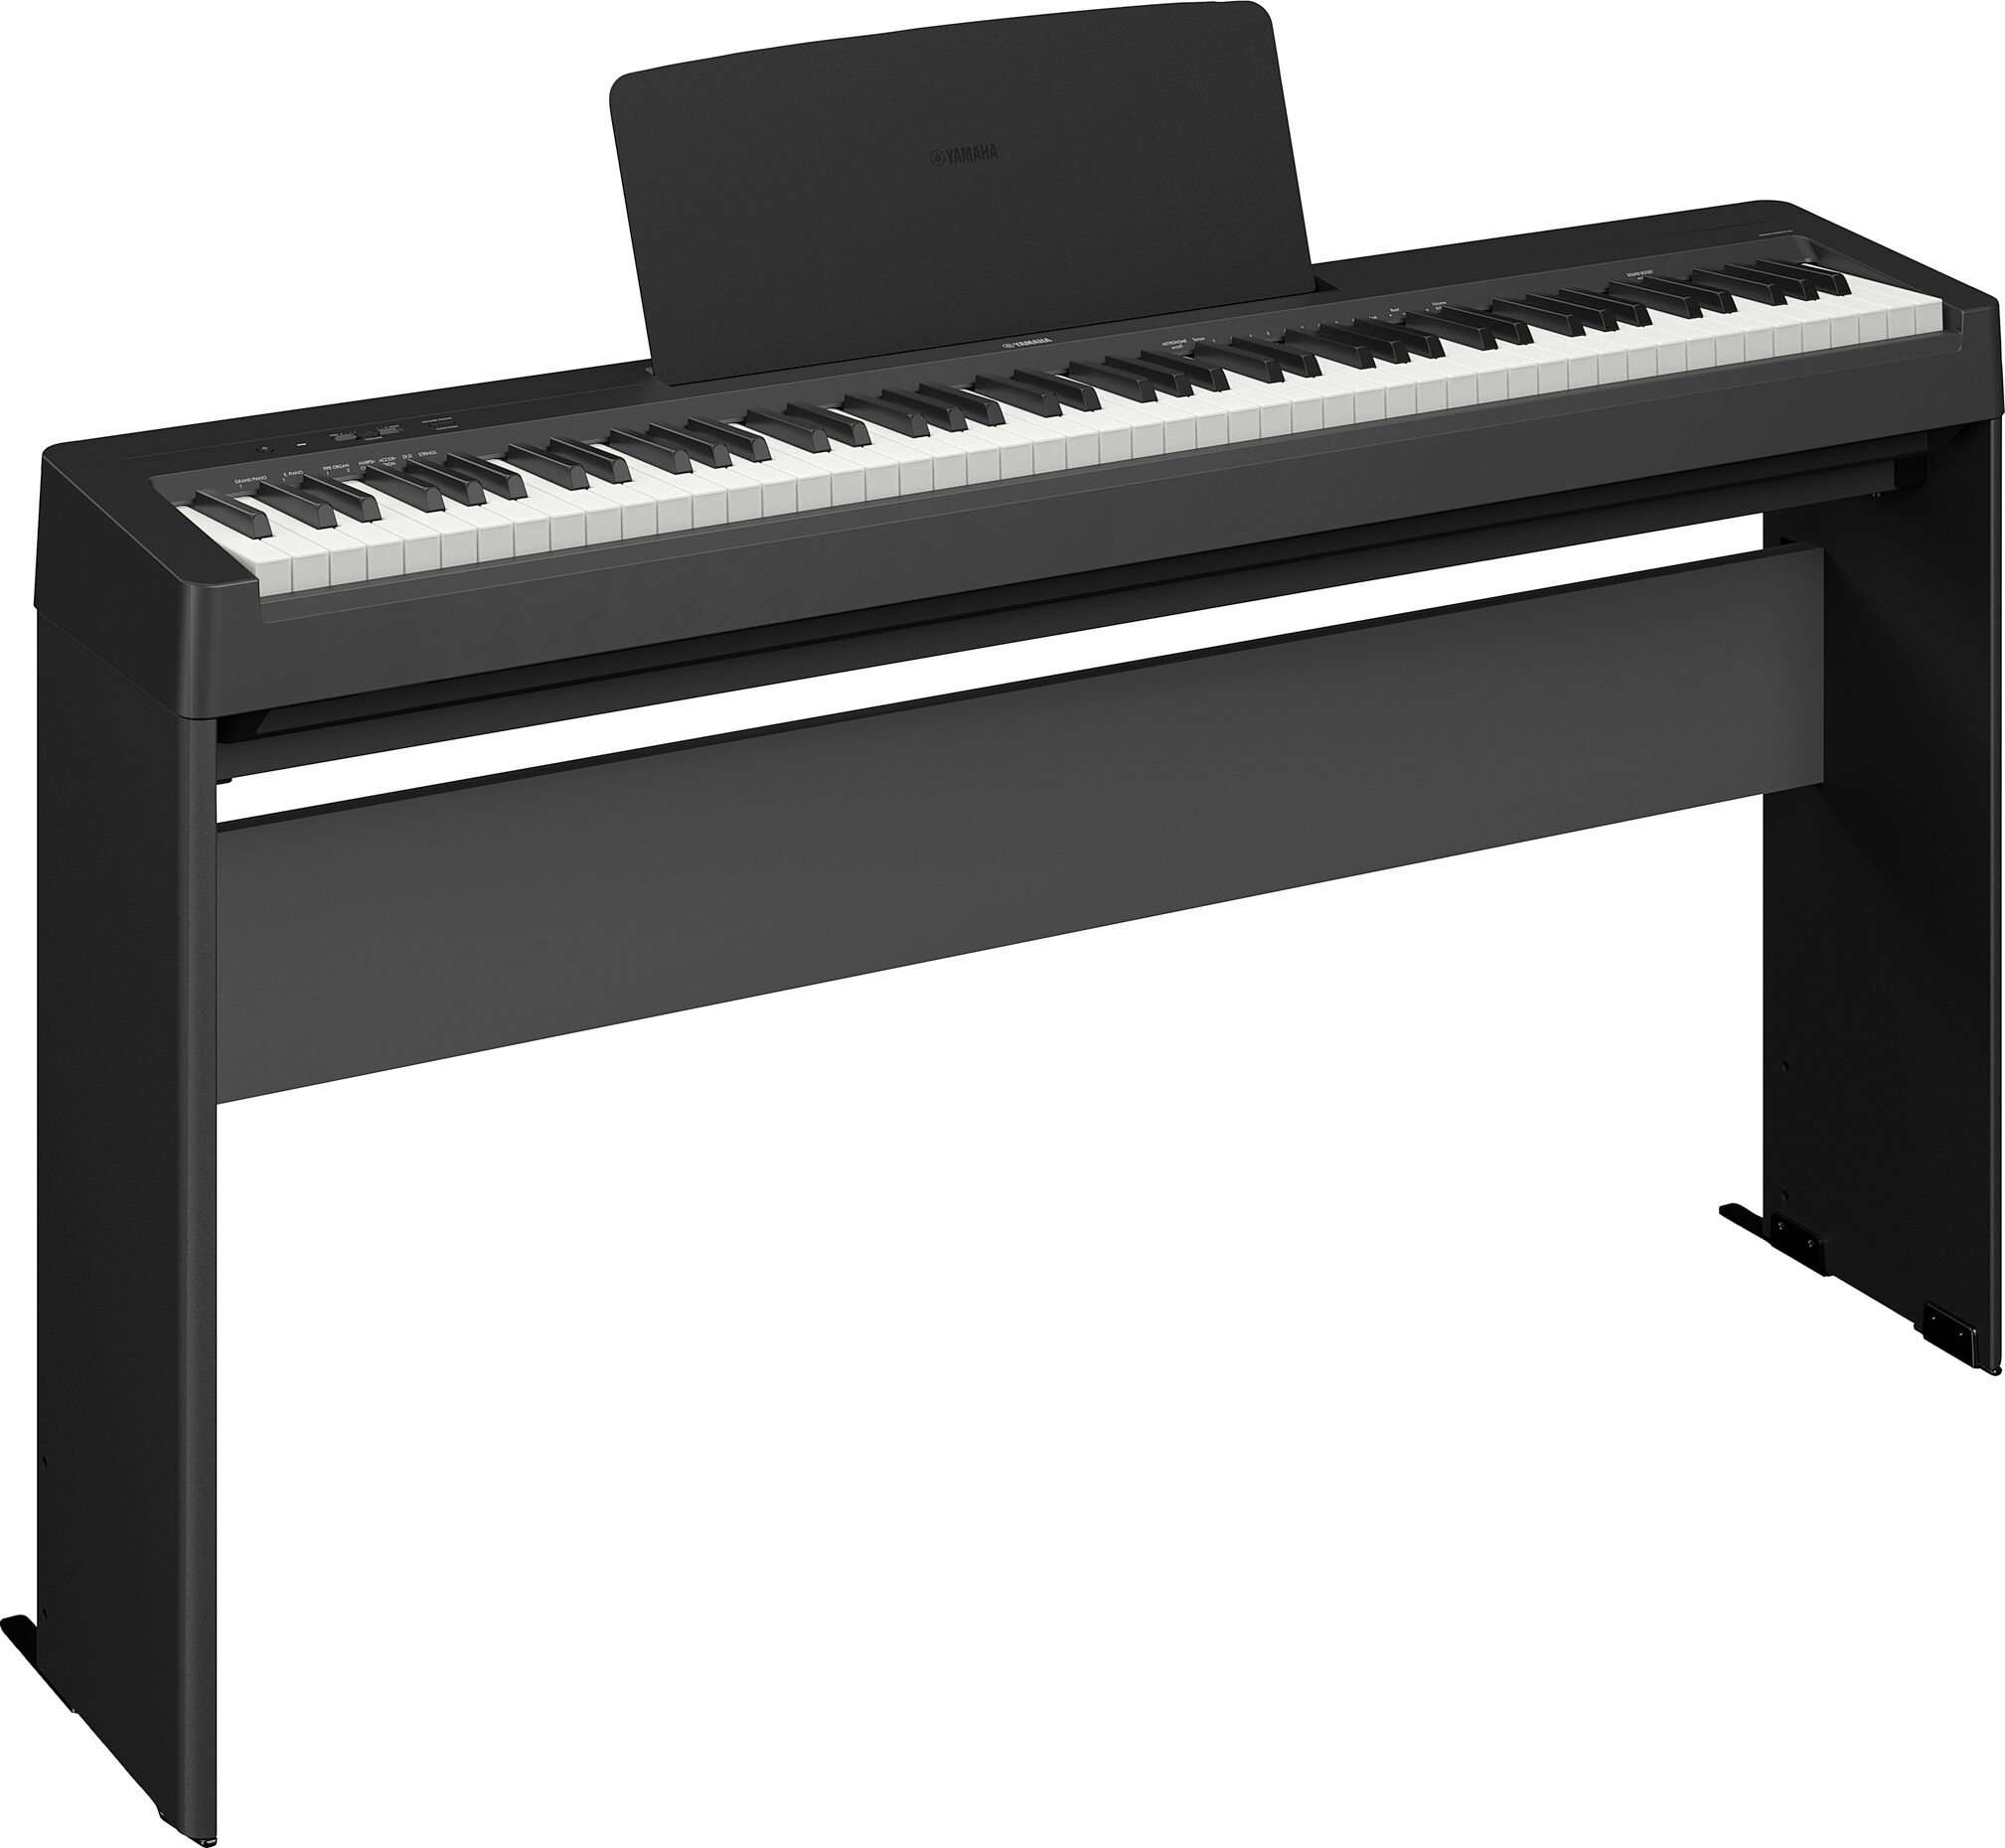 Yamaha P-145 Digital Piano Overview 